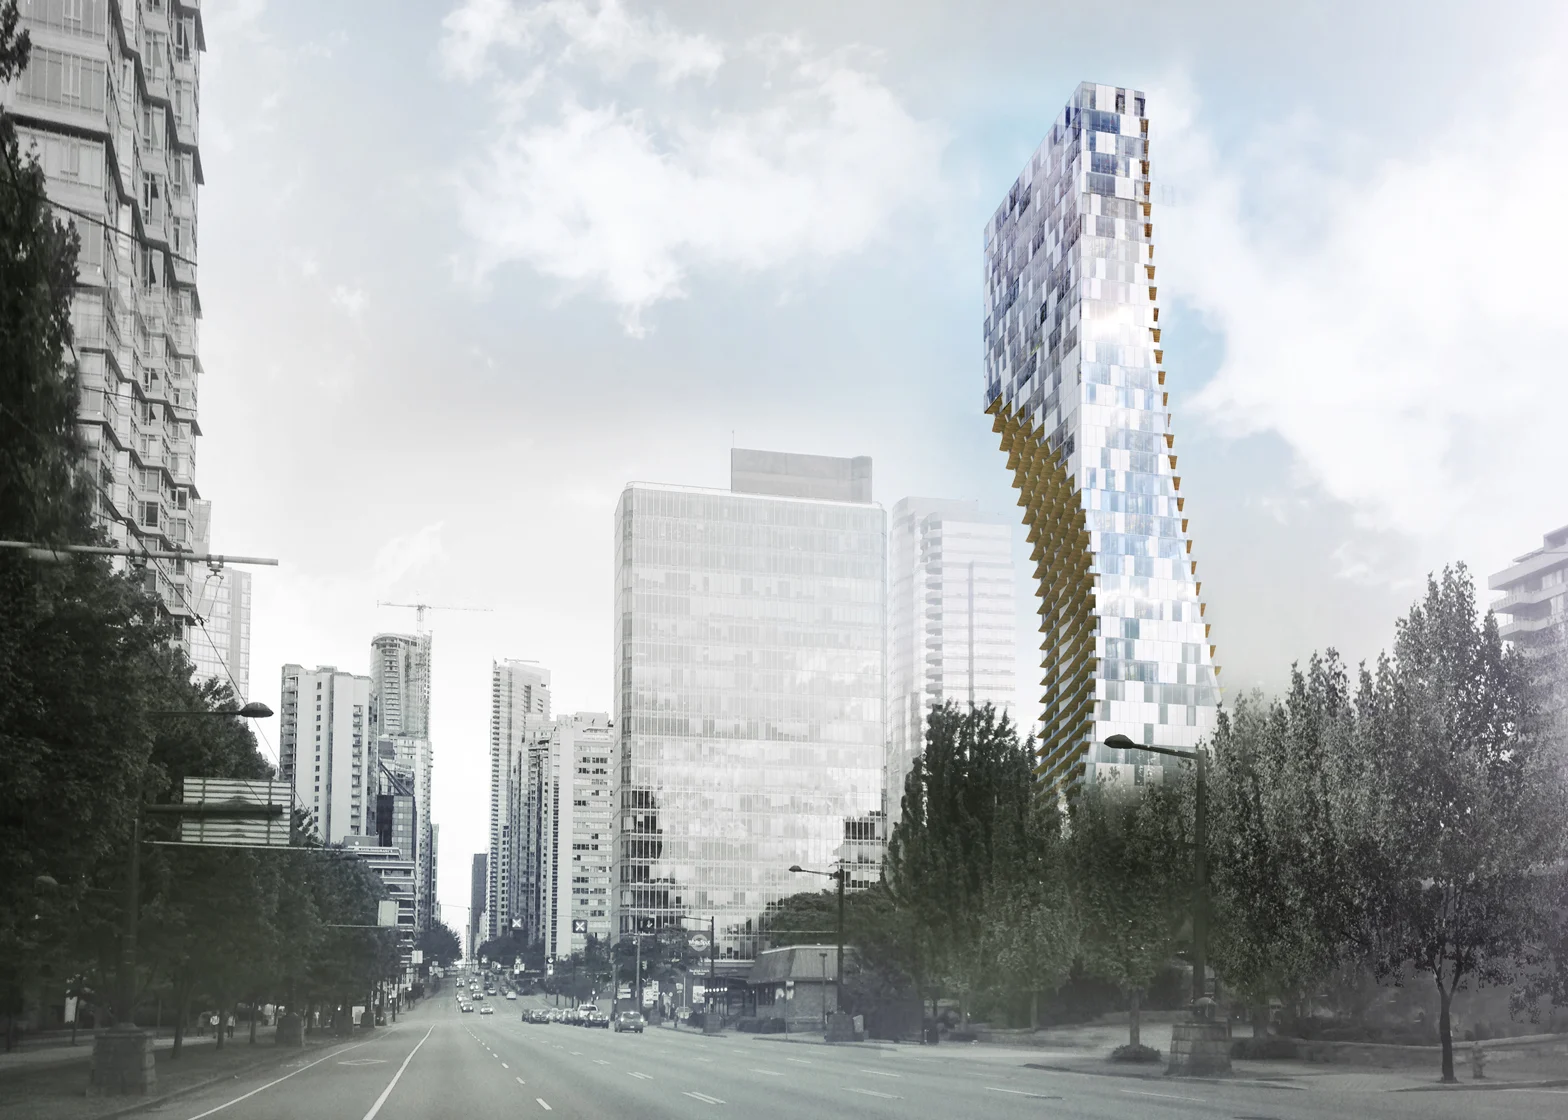 More information about "Τέλος του έτους ολοκληρώνεται ο ουρανοξύστης Alberni του Kengo Kuma στο Βανκούβερ"